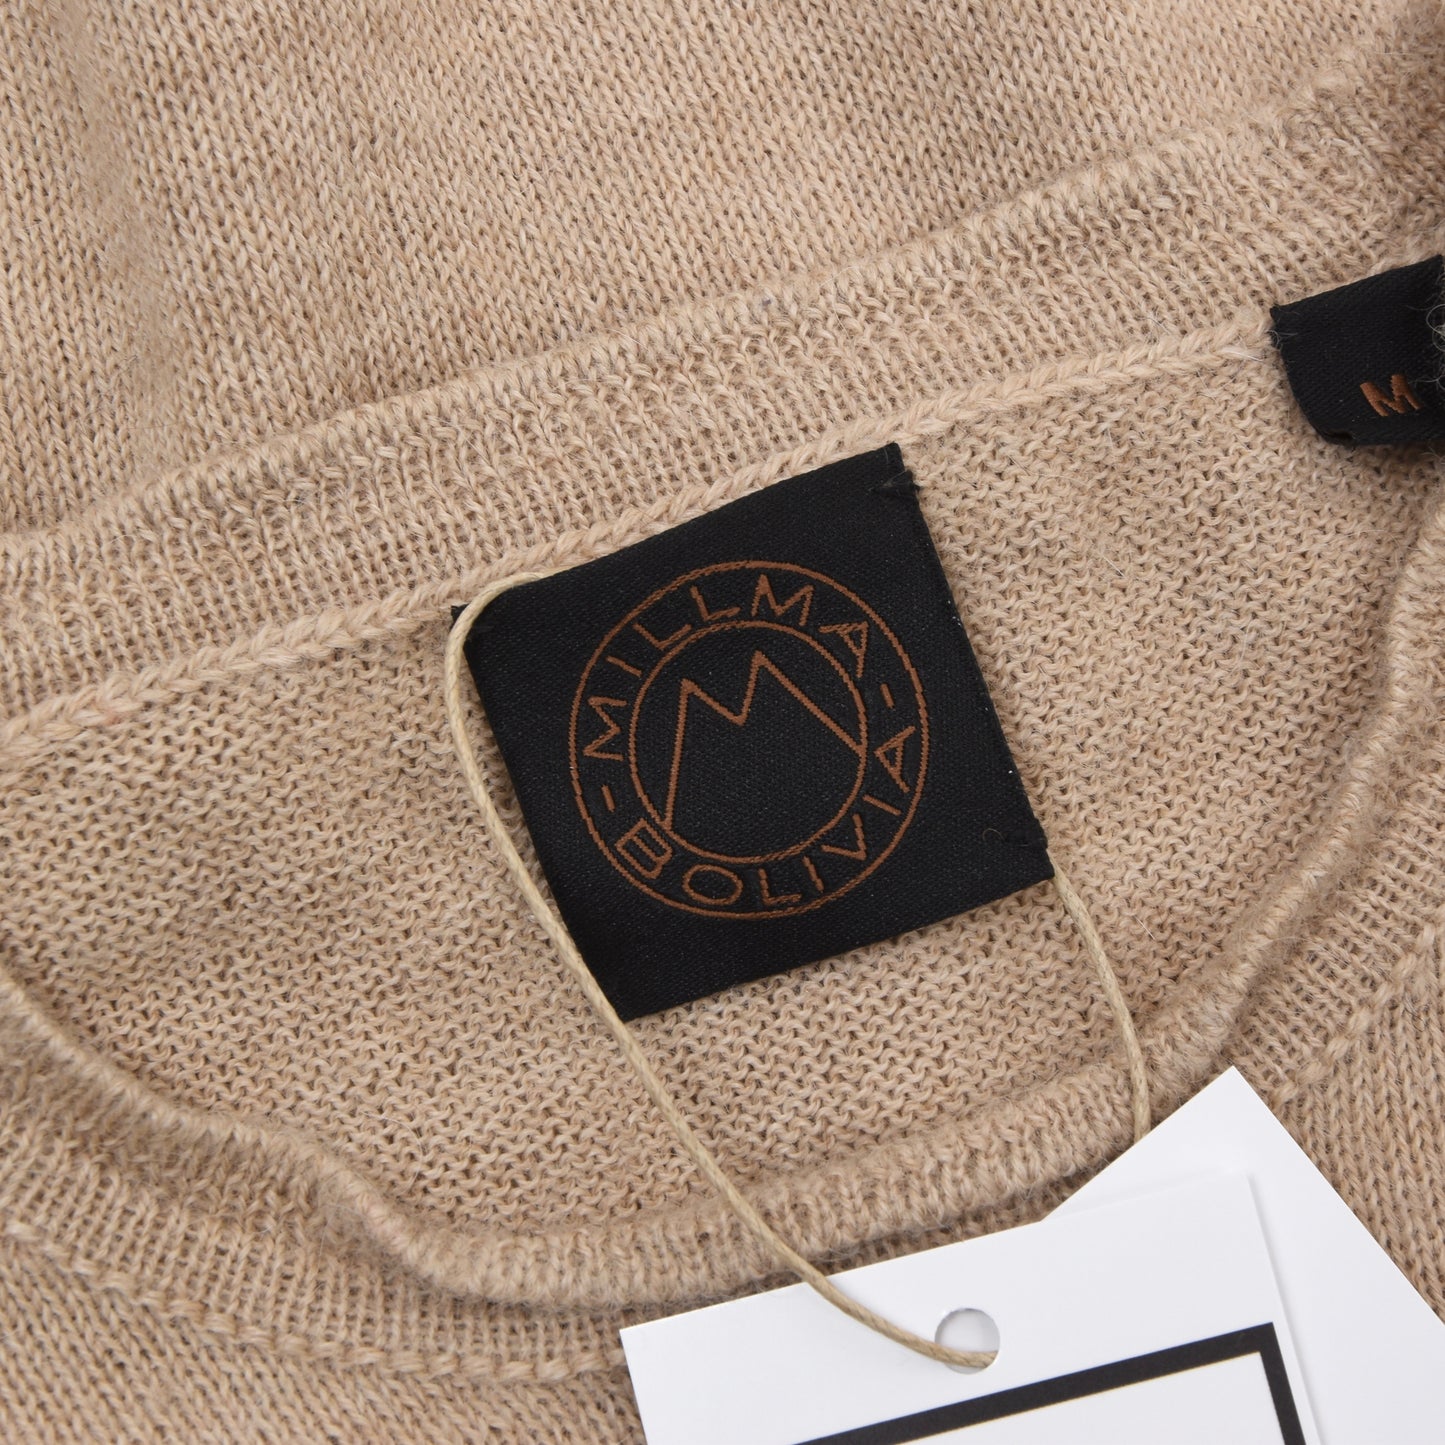 Millma Bolivia 100% Alpaca Sweater Size M - Beige